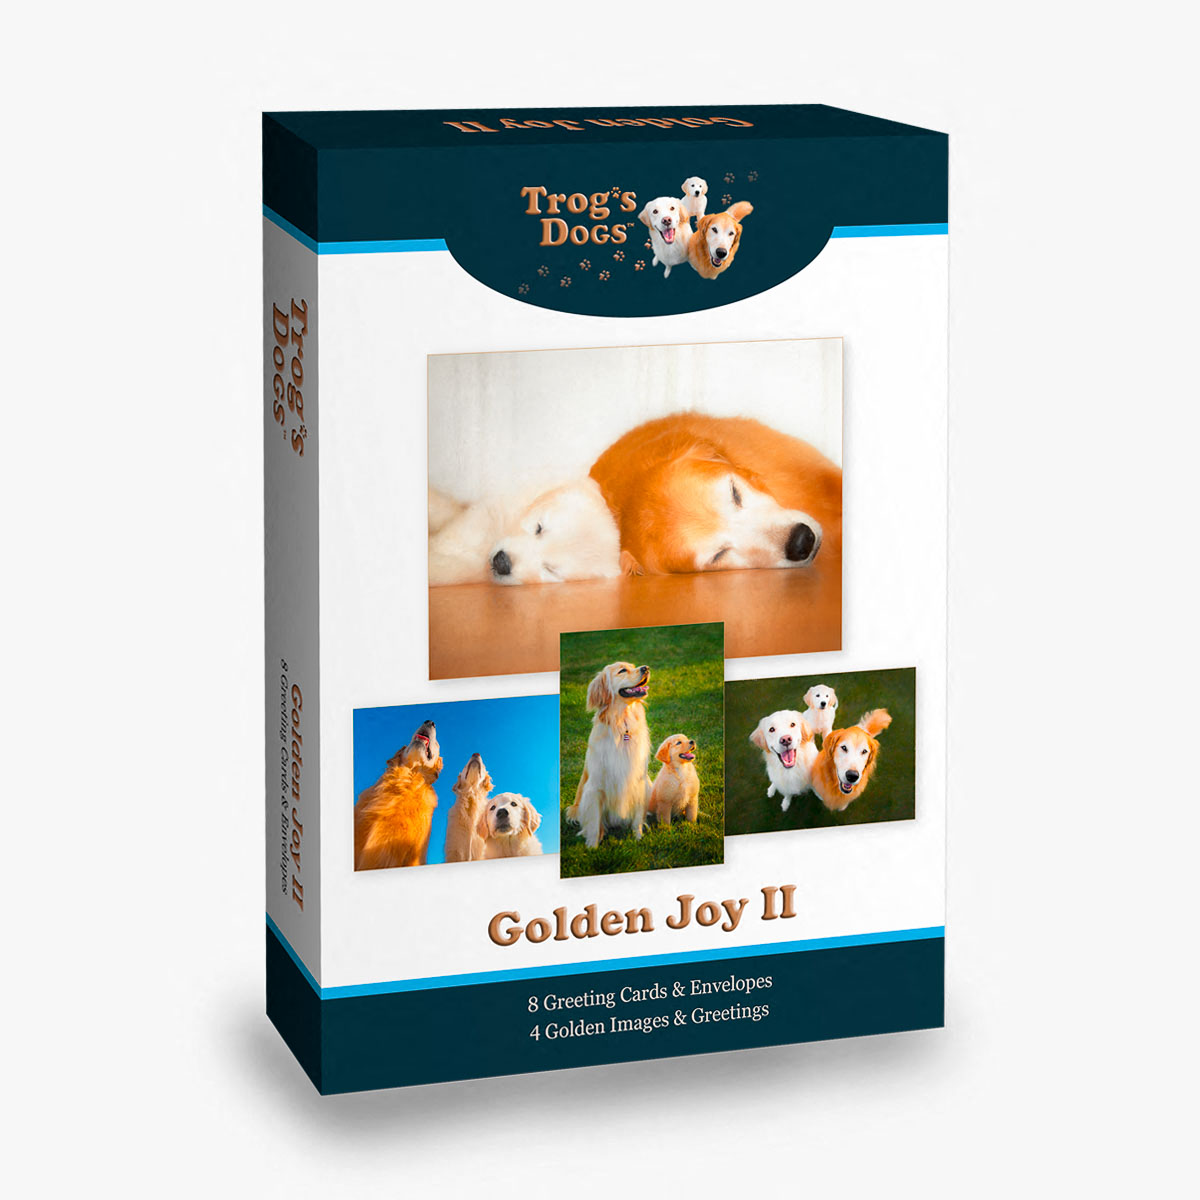 Trog's Dogs Golden Joy II Greeting Cards